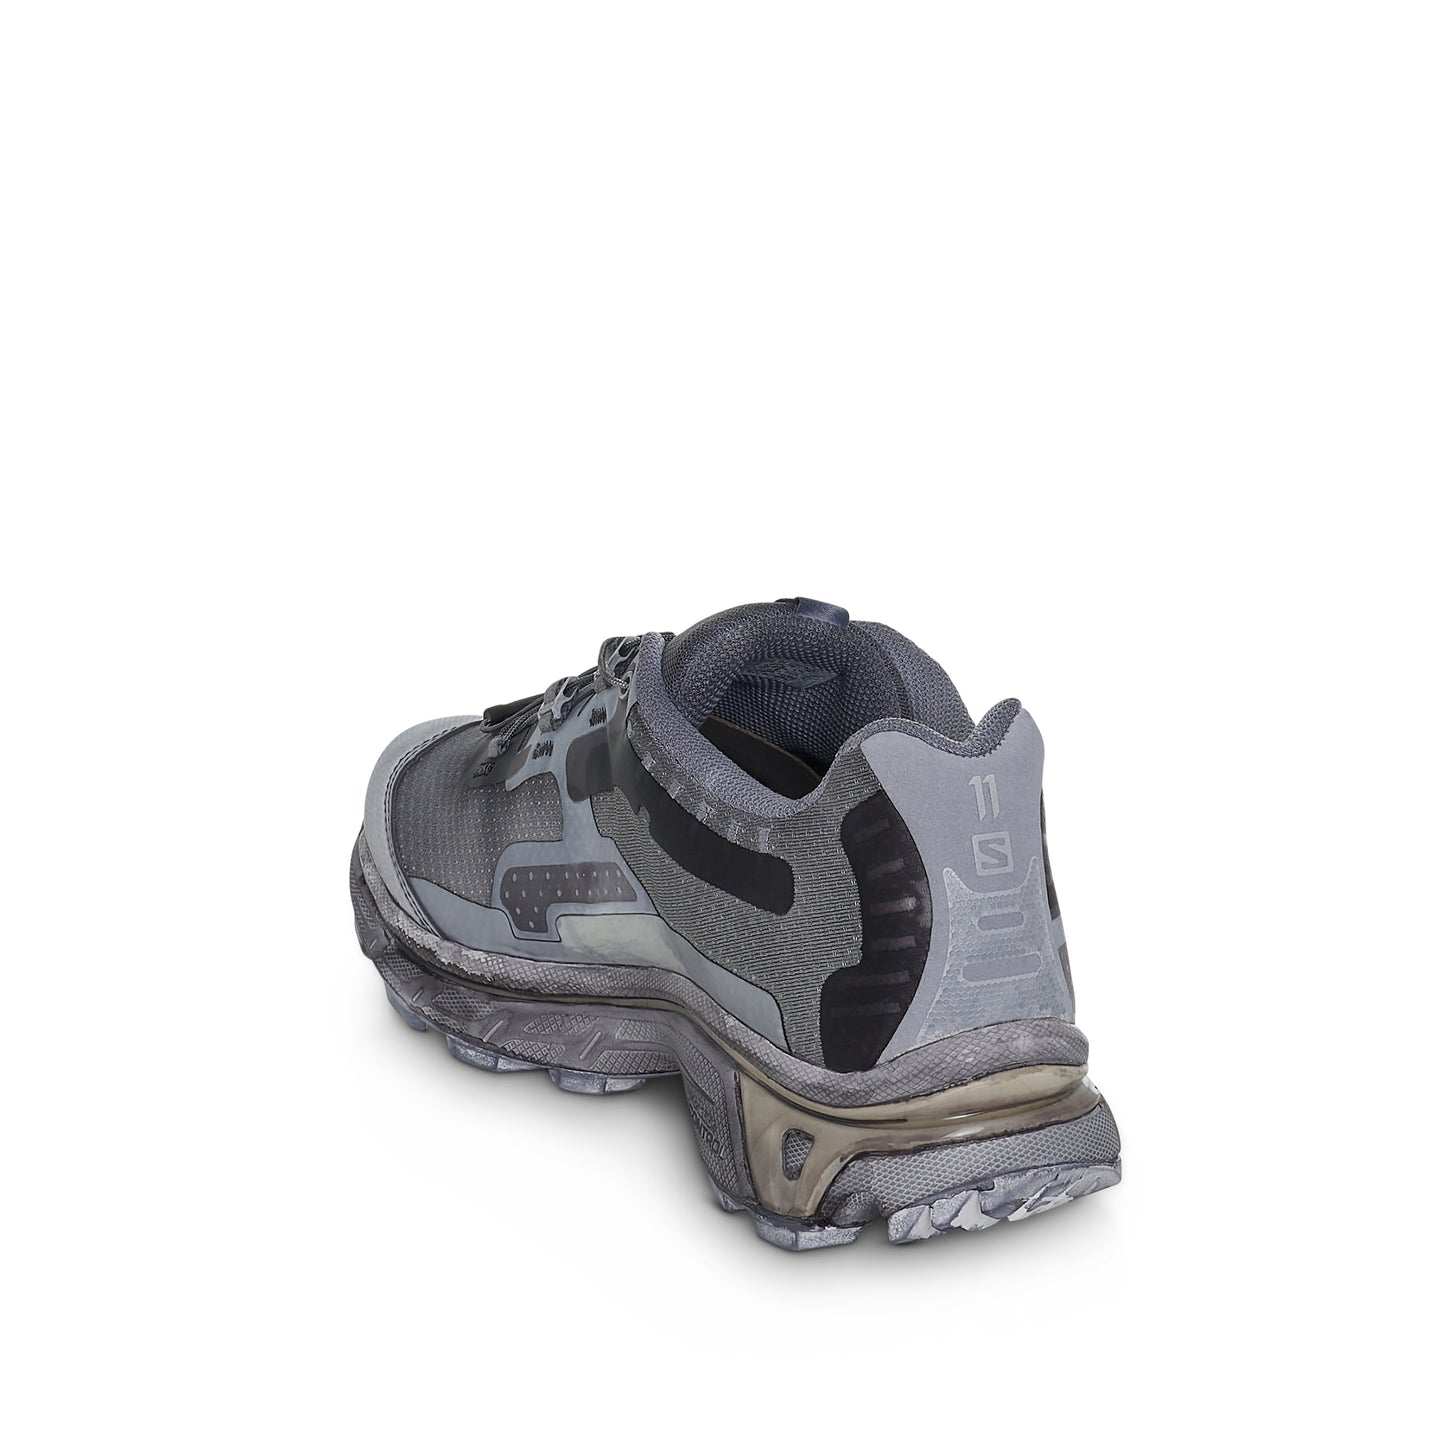 11BBS x Salomon Bamba 5 Dyed Sneaker in Light Grey